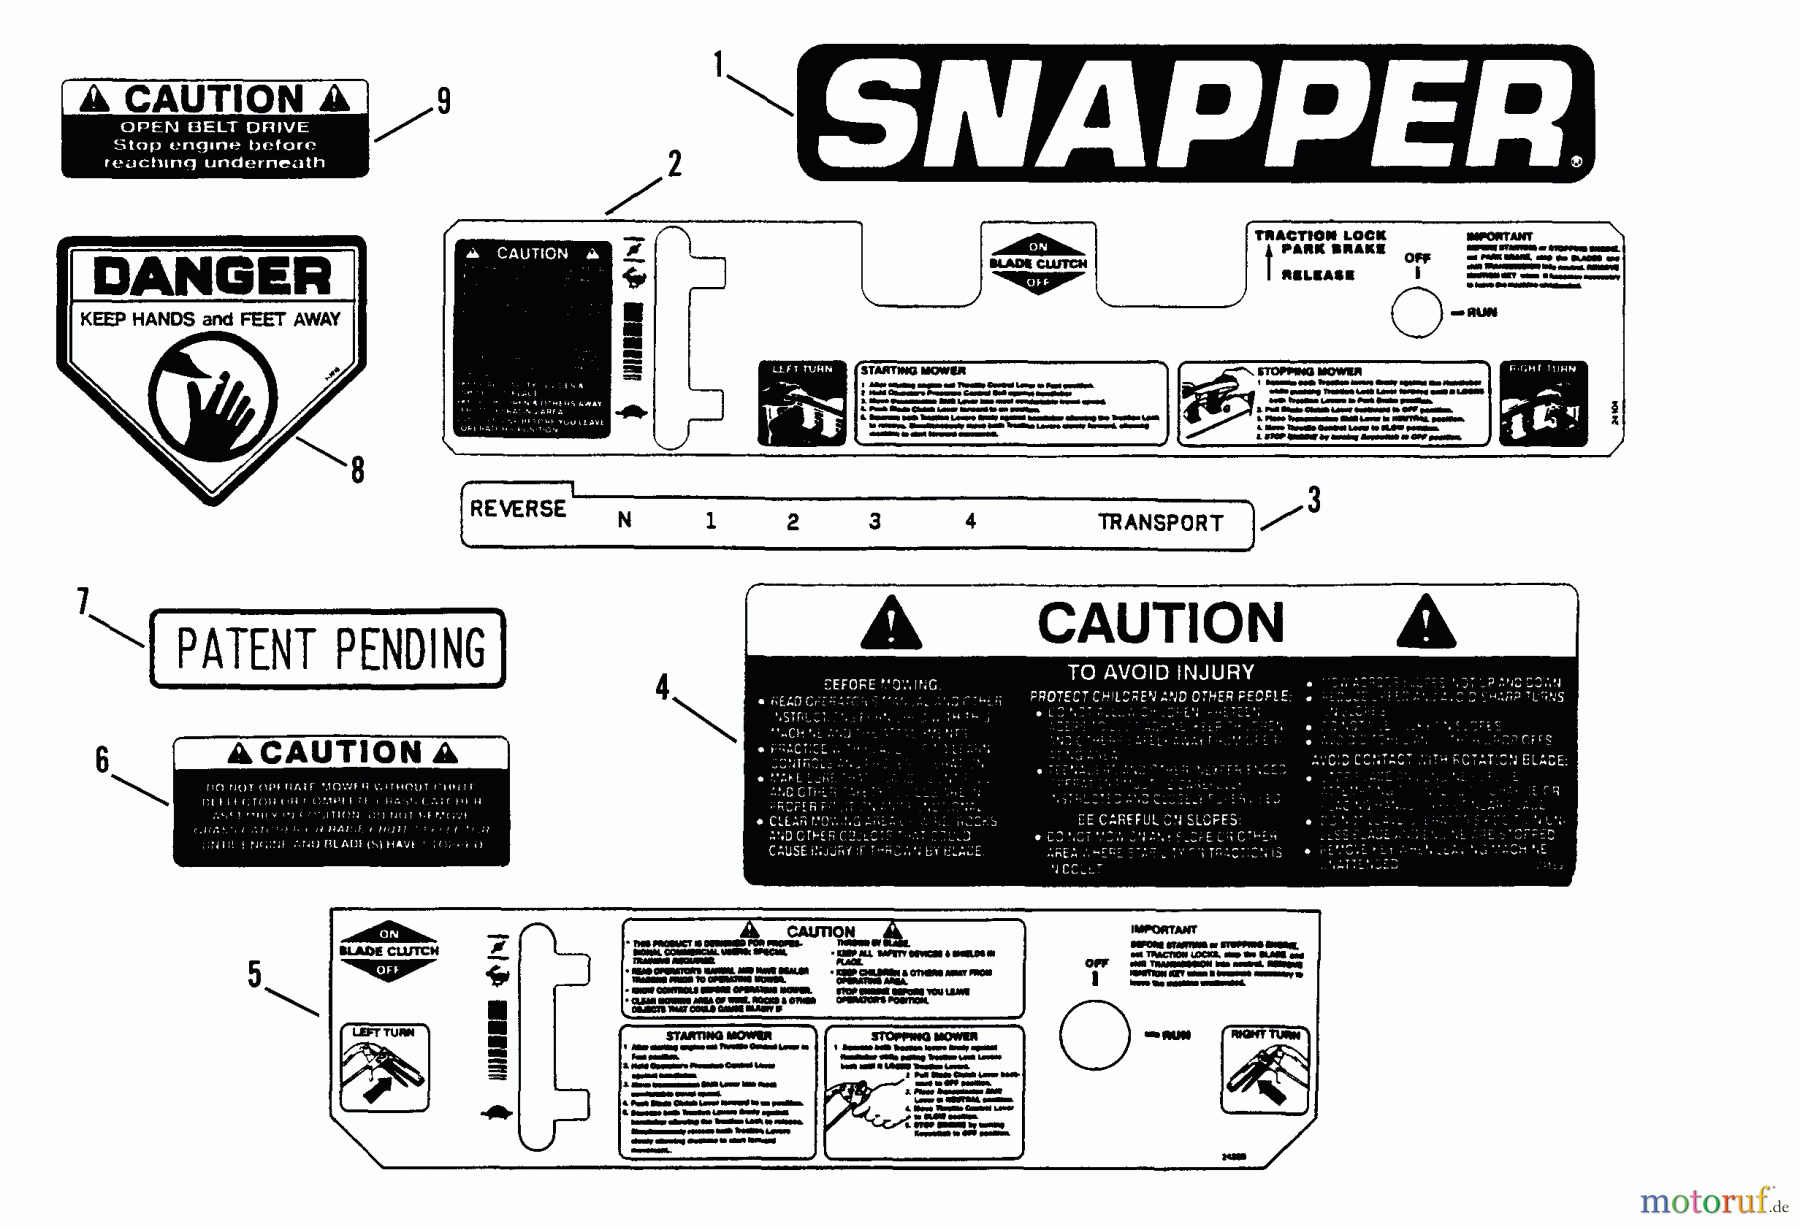  Snapper Rasenmäher für Großflächen PP71252KV - Snapper Wide-Area Walk-Behind Mower, 12.5 HP, Gear Drive, Pistol Grip, Series 2 Decals